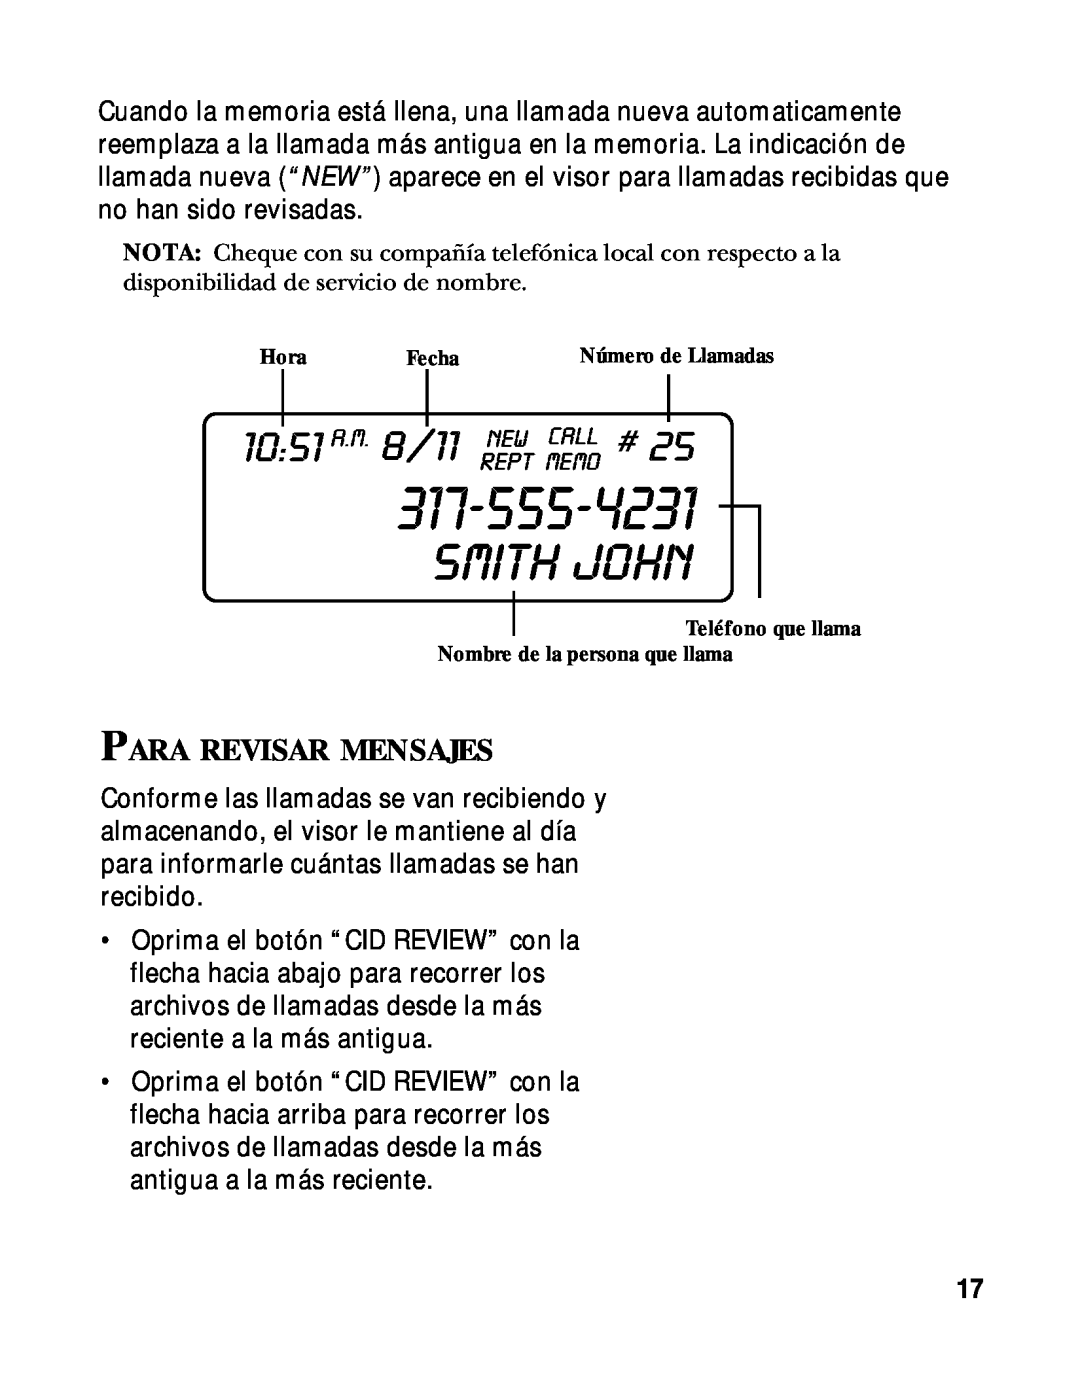 RCA 900 MHz manual Para Revisar Mensajes, Smith John, 10 51 A.M. 8/11 NEW CALL #, Hora FechaNúmero de Llamadas 